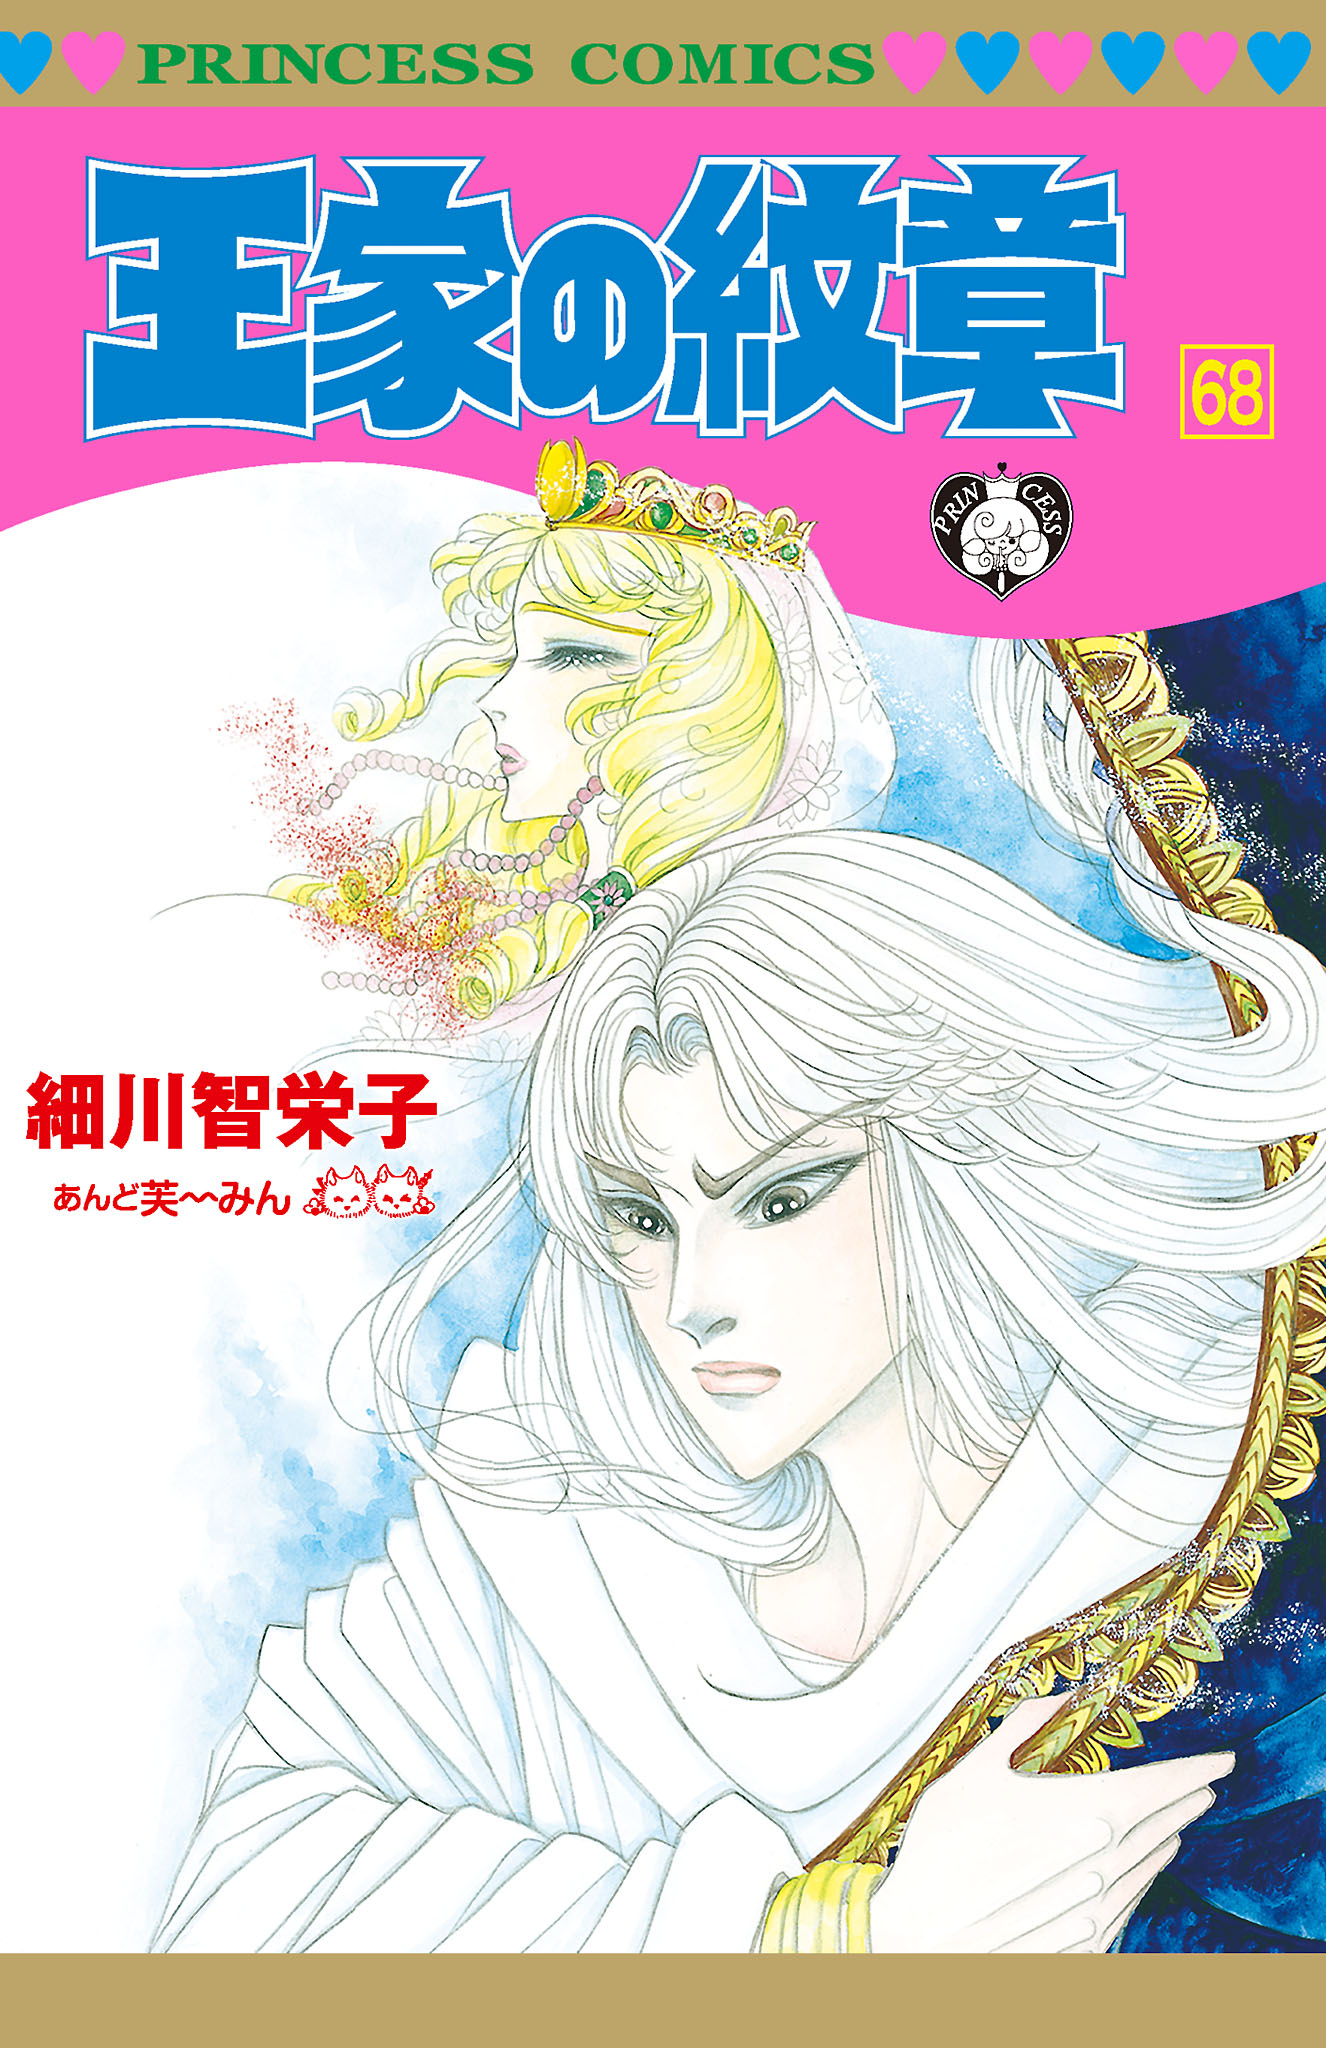 世界の 王家の紋章 1巻〜63巻 少女漫画 - zenkoh.com